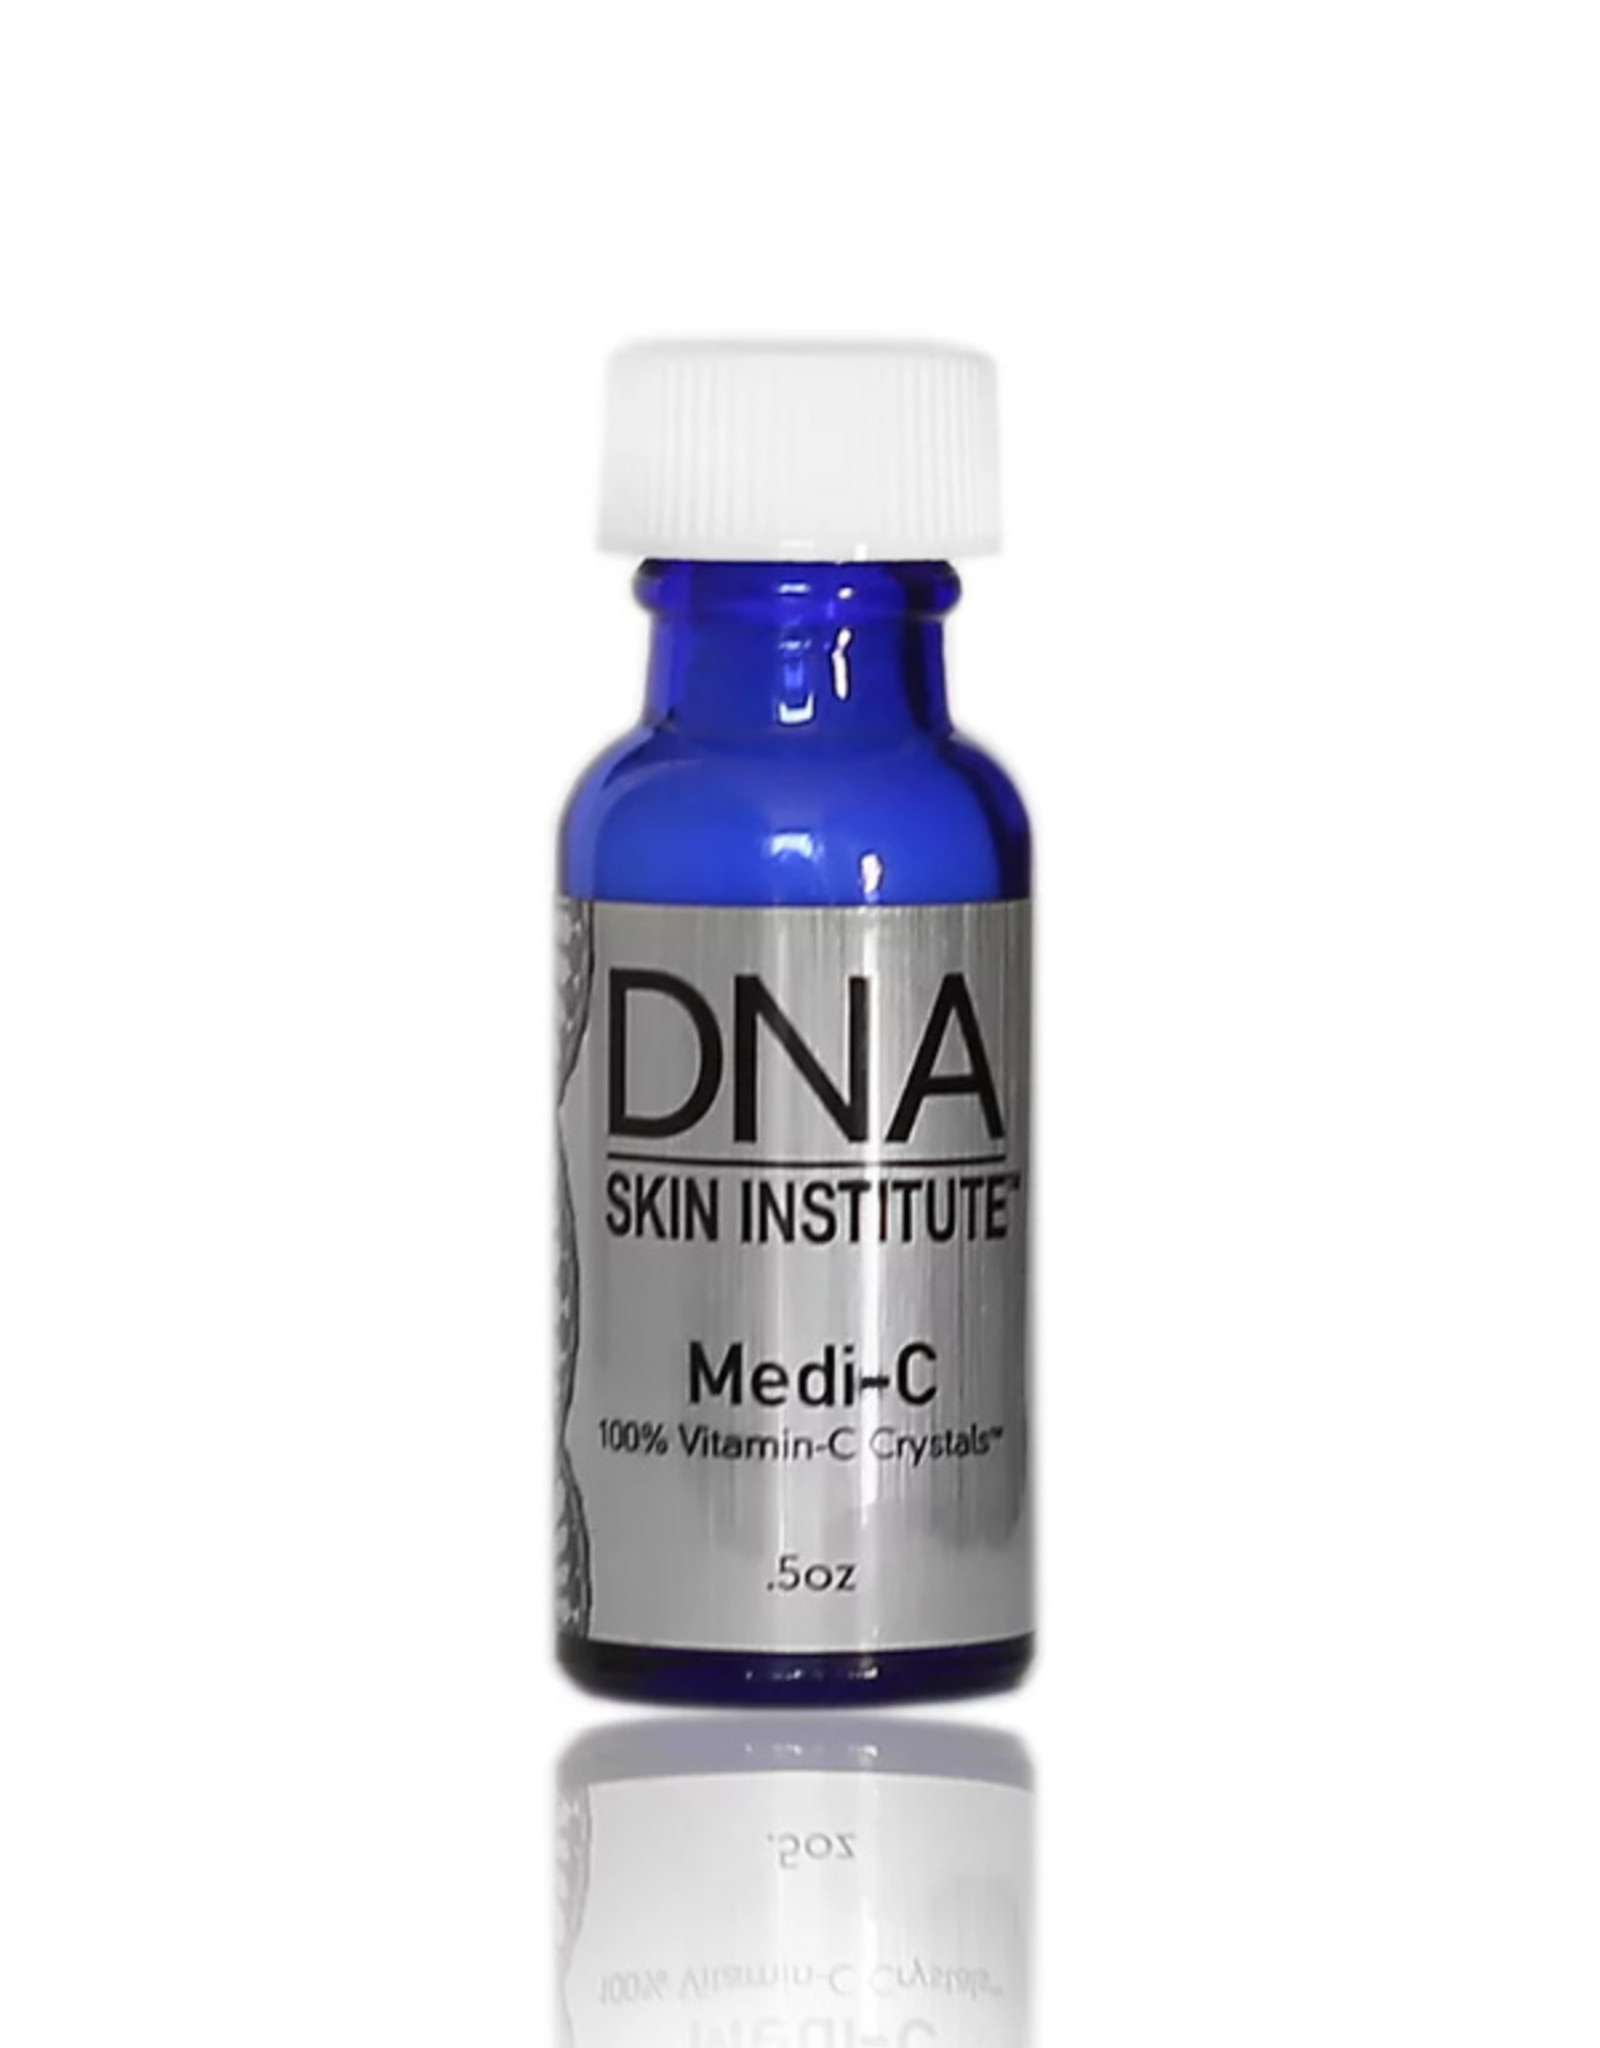 DNA Skin Institute Medi-C Vitamin C Crystals